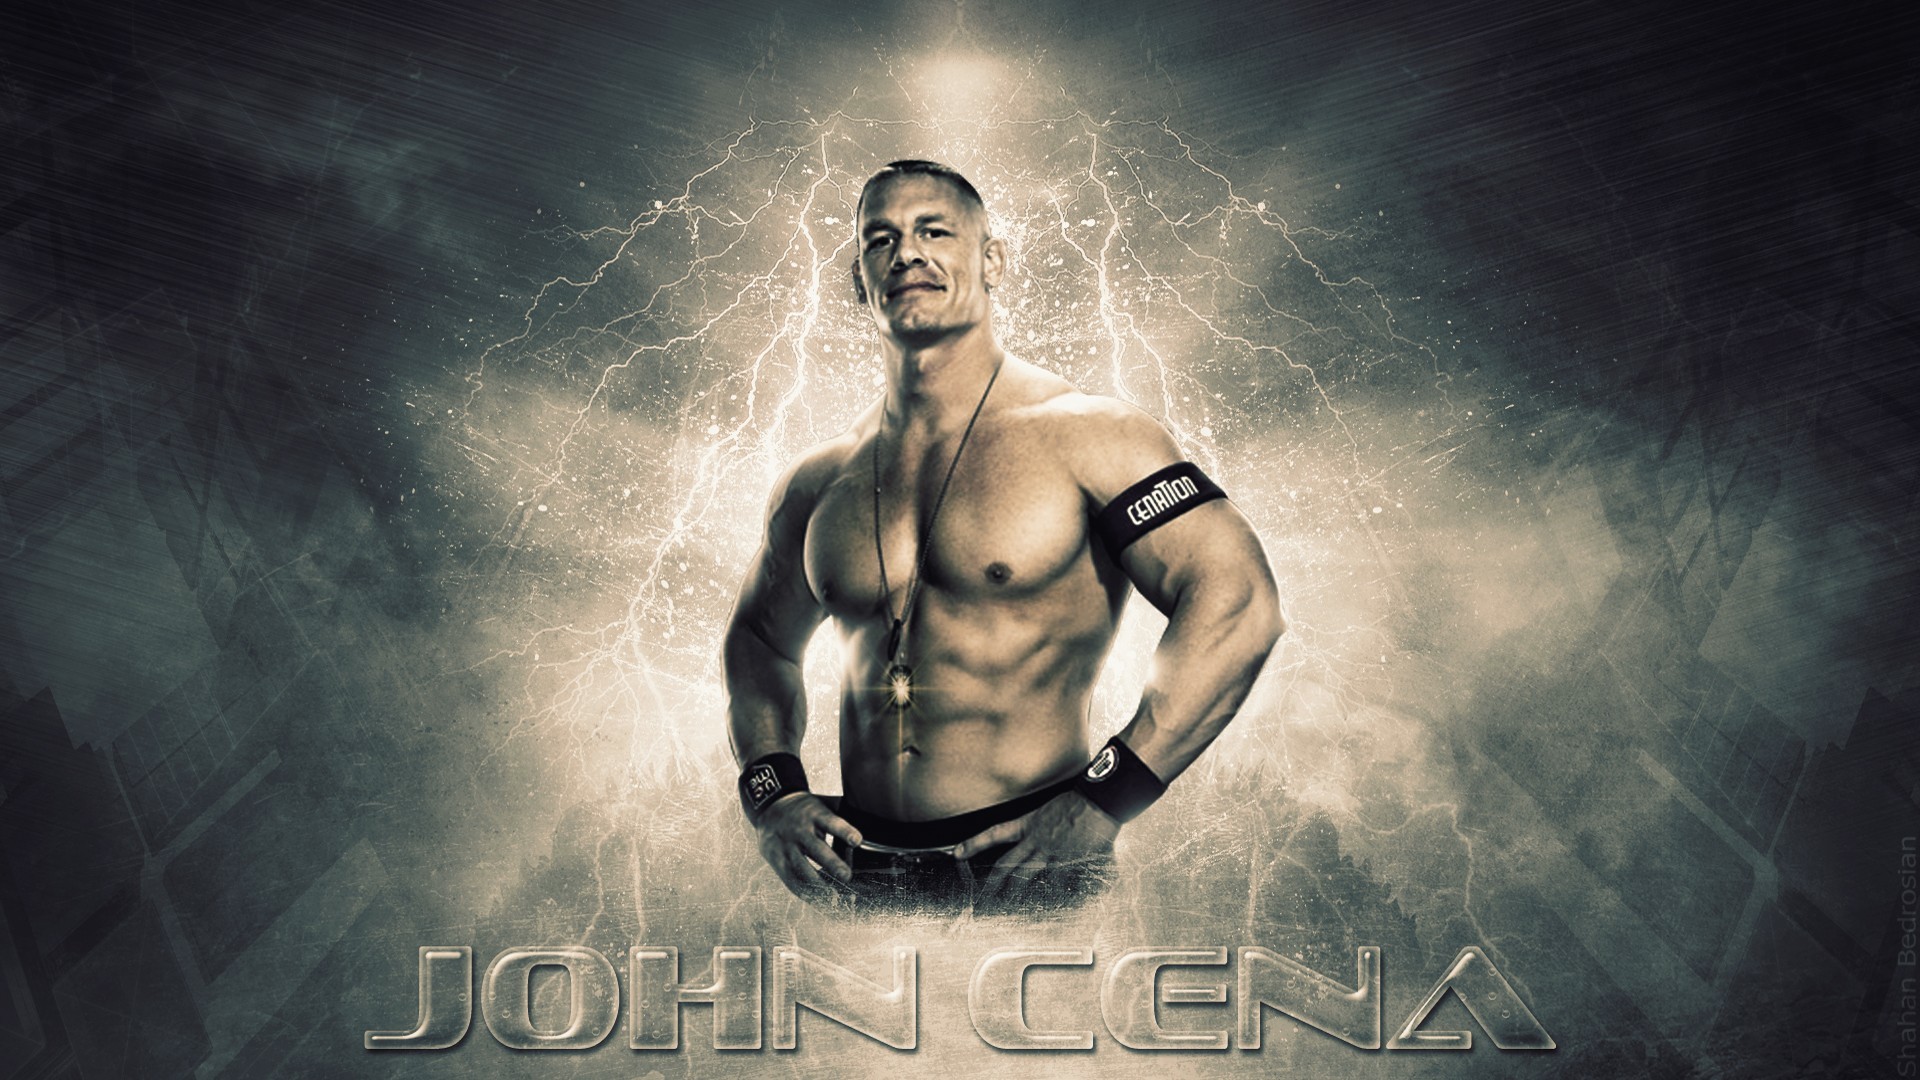 John Cena Widescreen Wallpaper 5